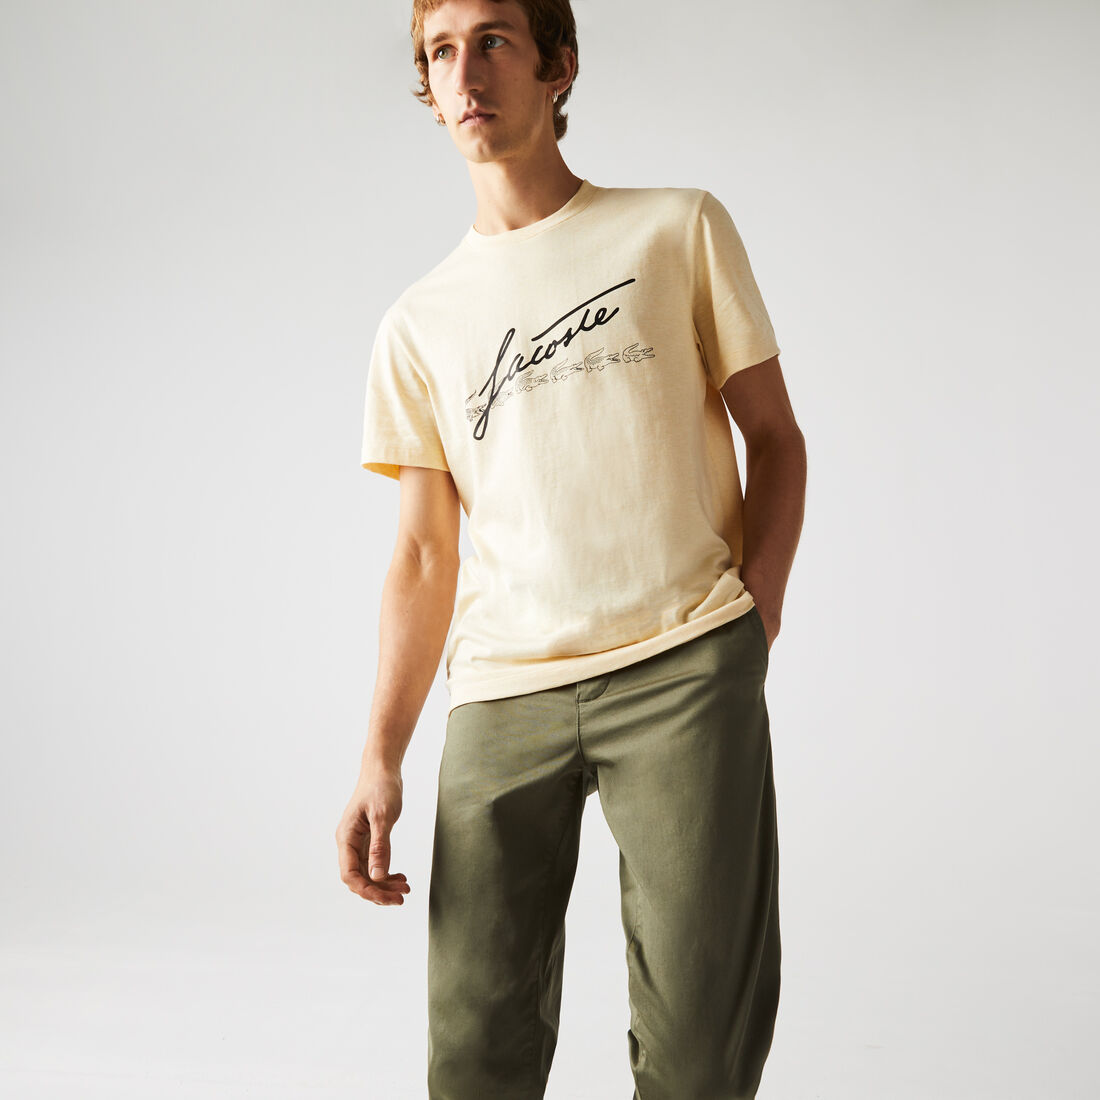 Lacoste Signature And Crocodile Print Crew Neck Baumwoll T-shirts Herren Gelb | SIWJ-89013